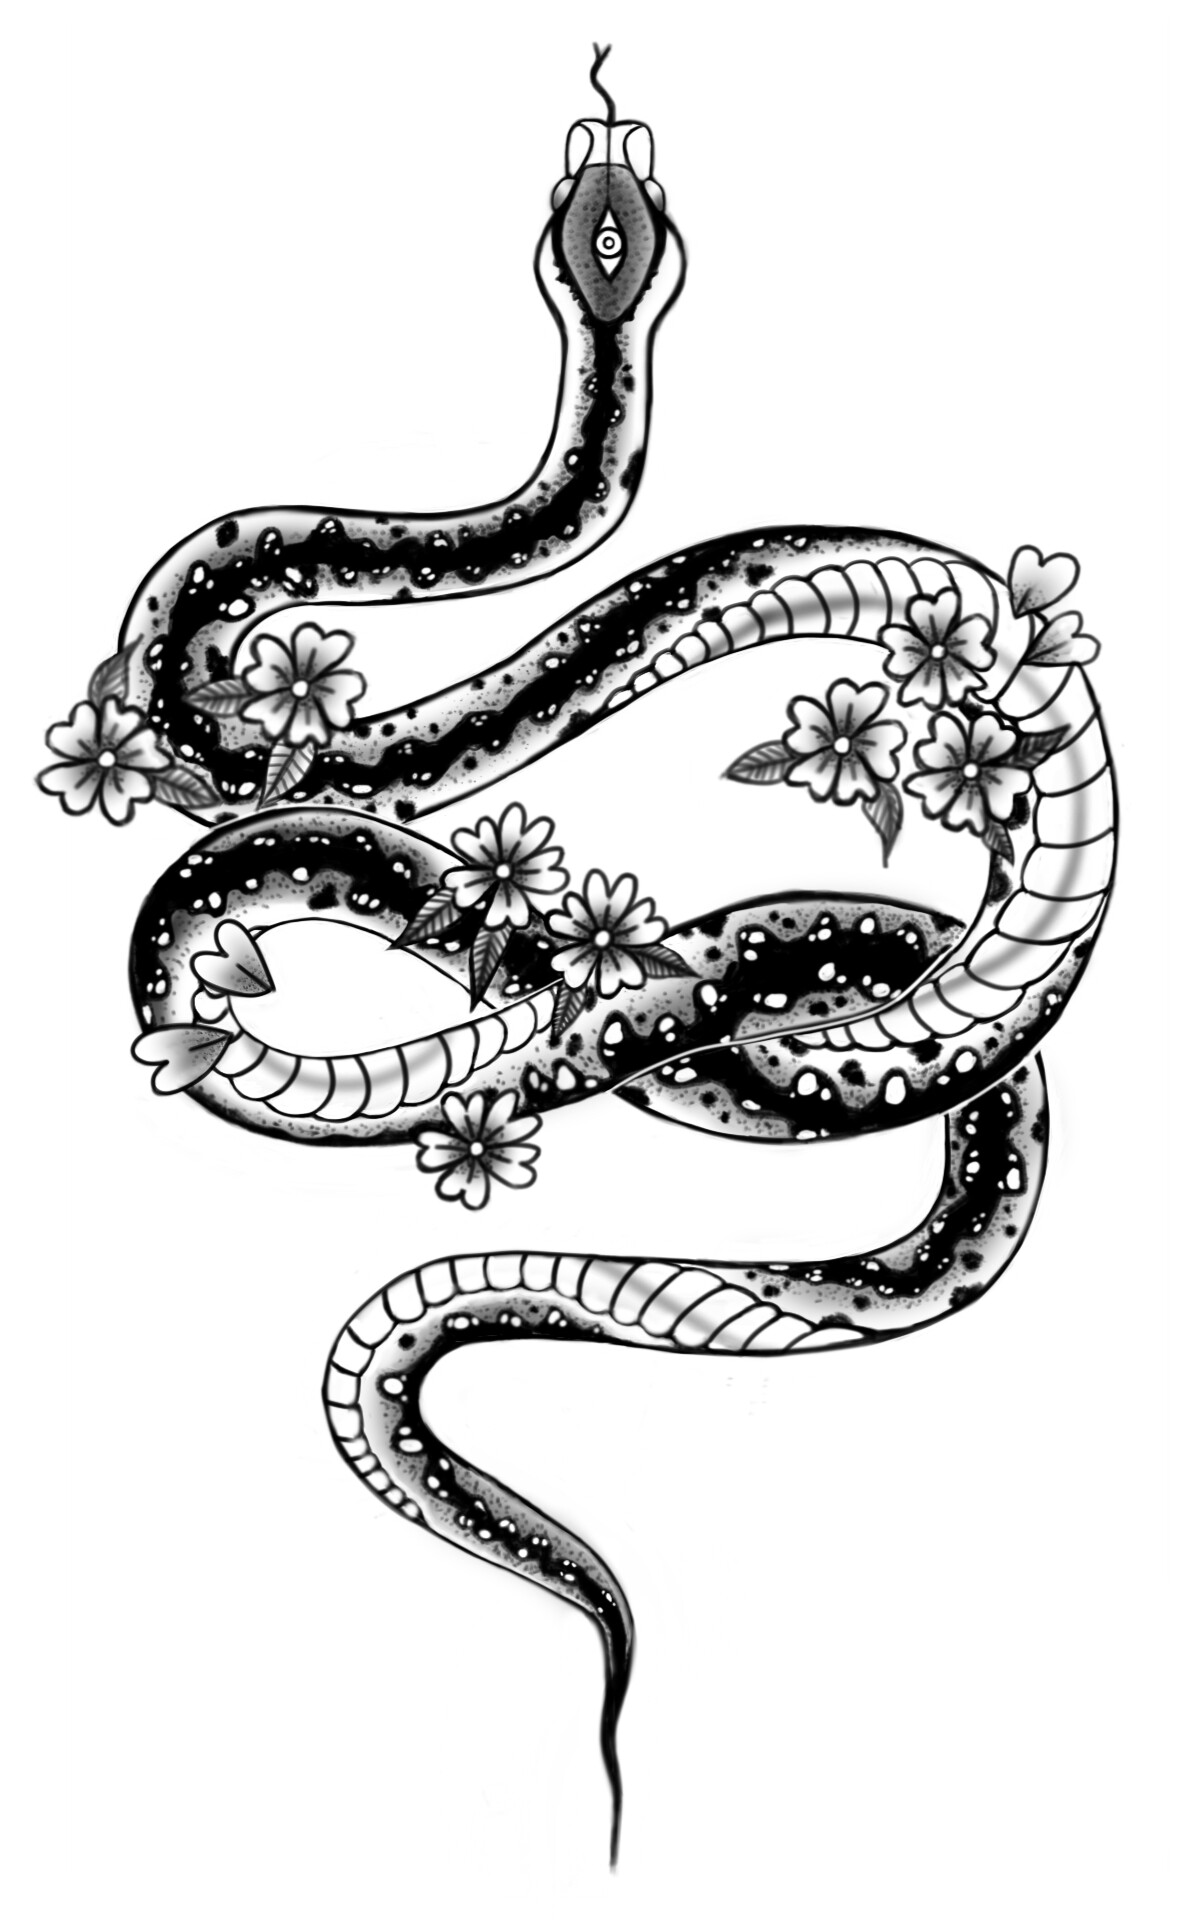 1174 Old School Snake Tattoo Images Stock Photos  Vectors  Shutterstock